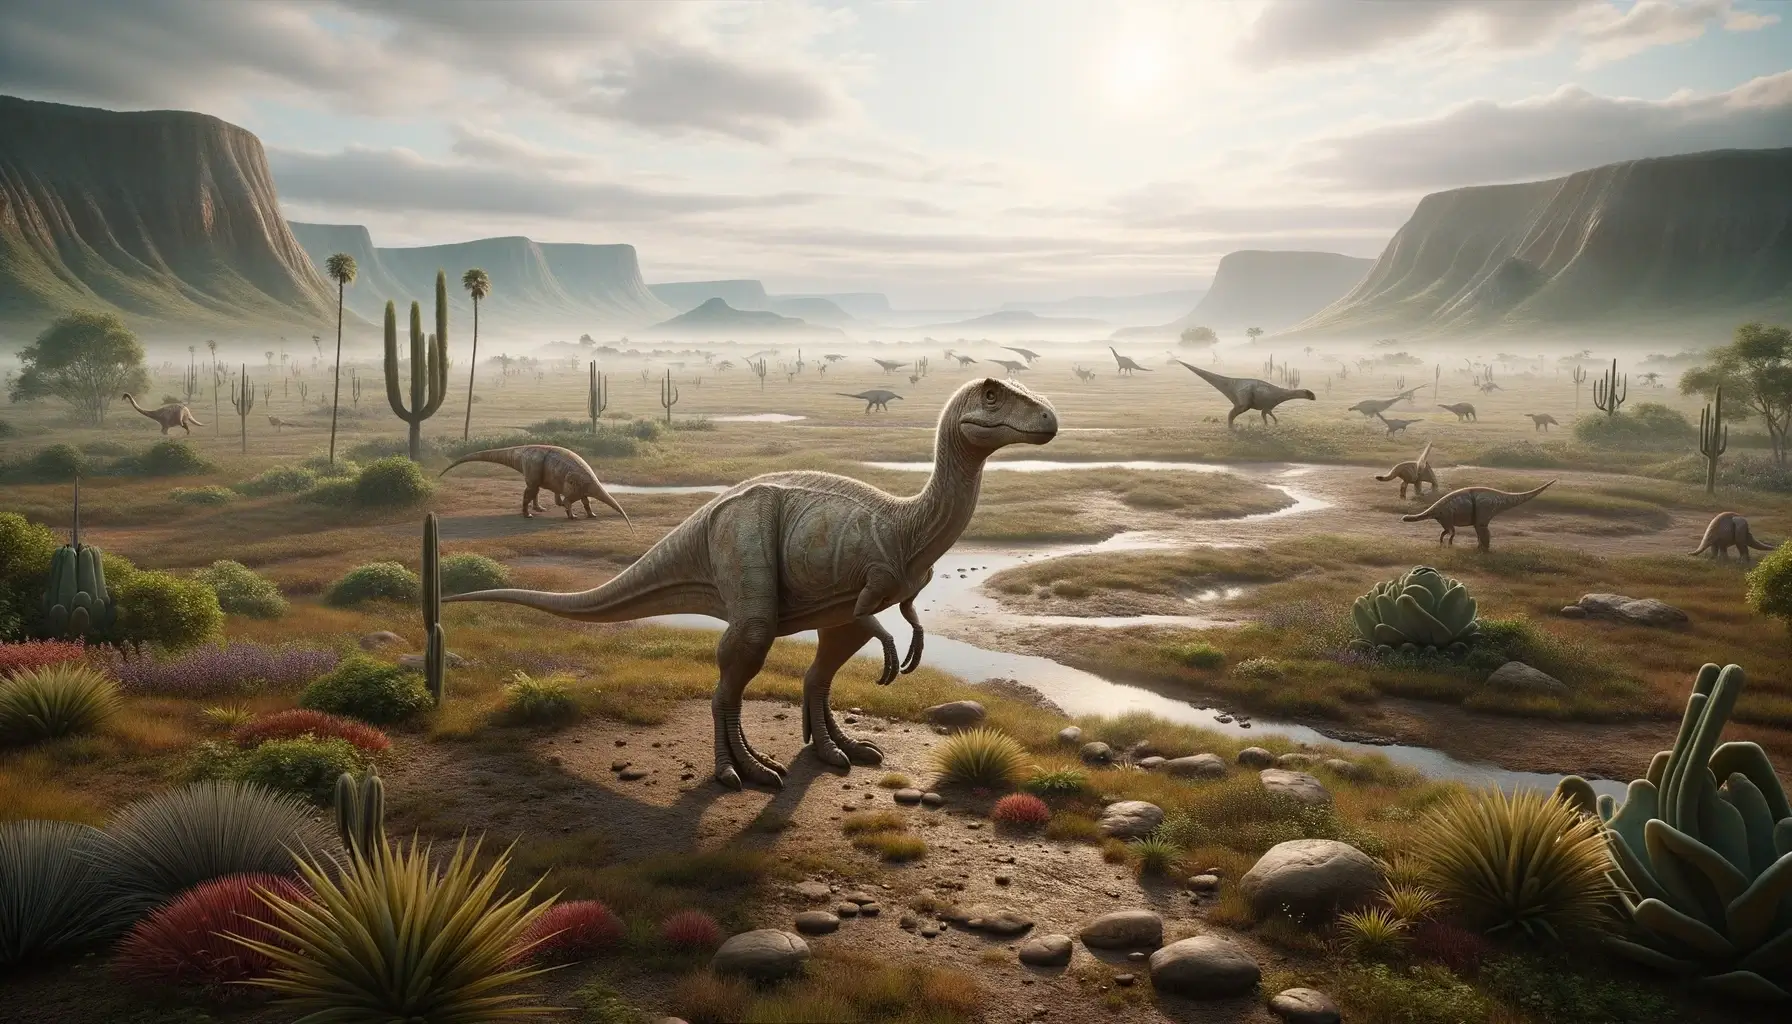 Agilisaurus dinosaur in semi-arid habitat with vegetation and other dinosaurs in the distance.